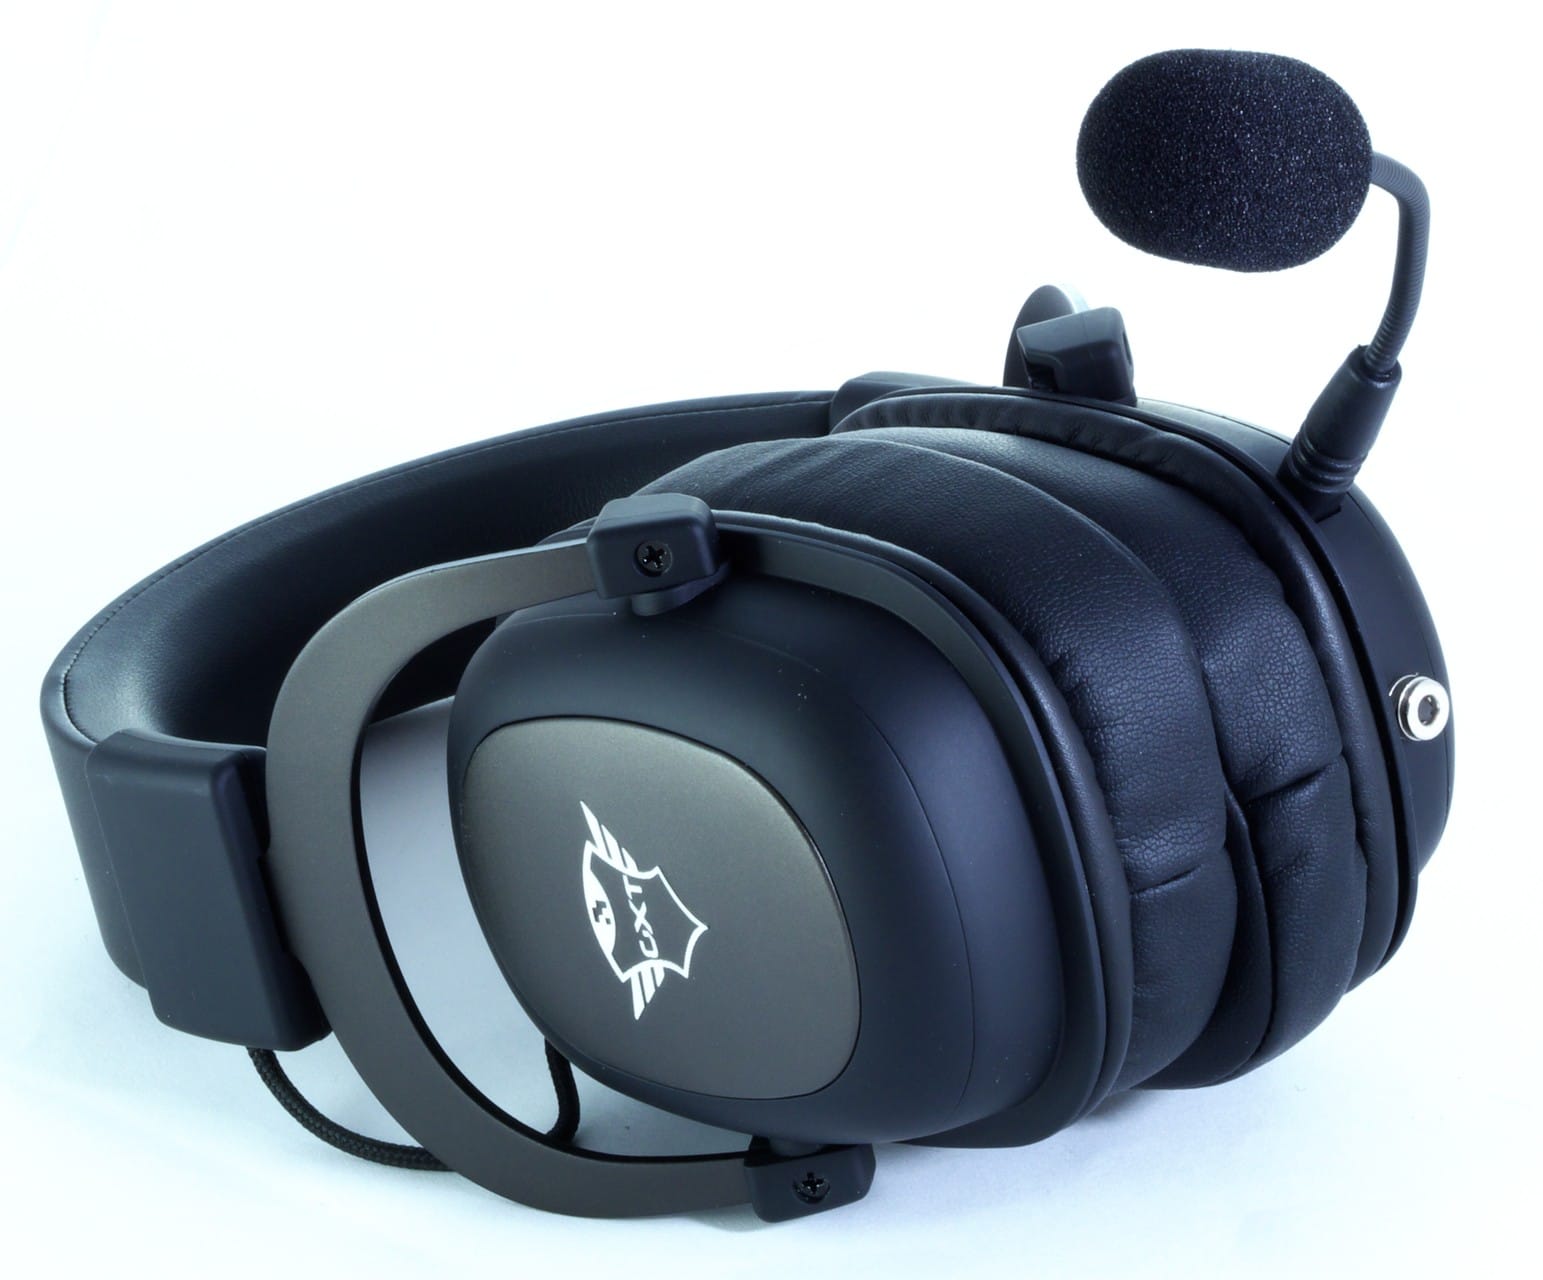 Trust Gxt 414 Zamak Premium Review High Comfort Gaming Headset